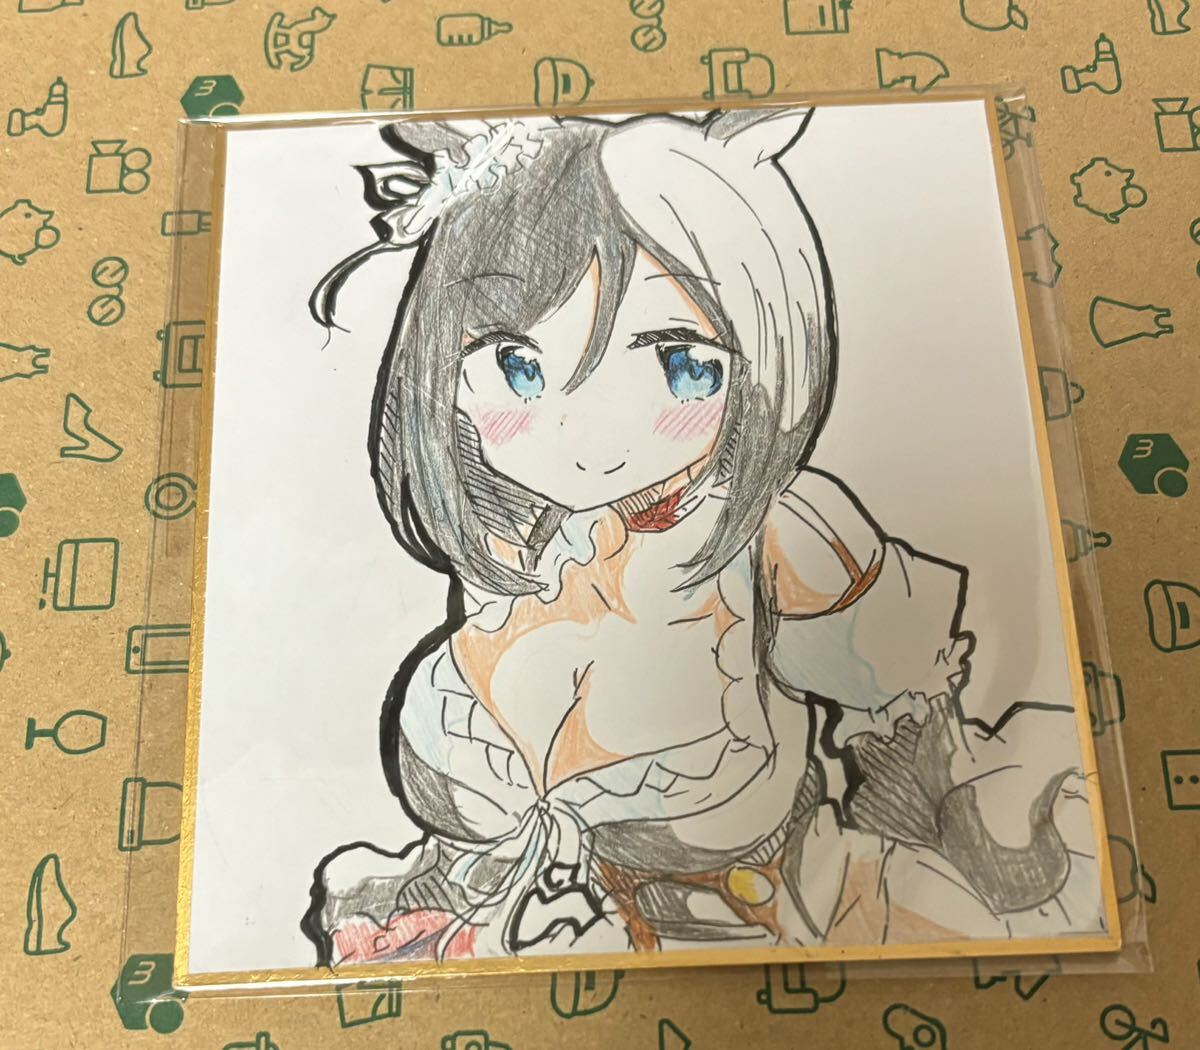 Uma Musume Eishin Flash Colored Paper Handwritten Hand Painting, comics, anime goods, hand drawn illustration